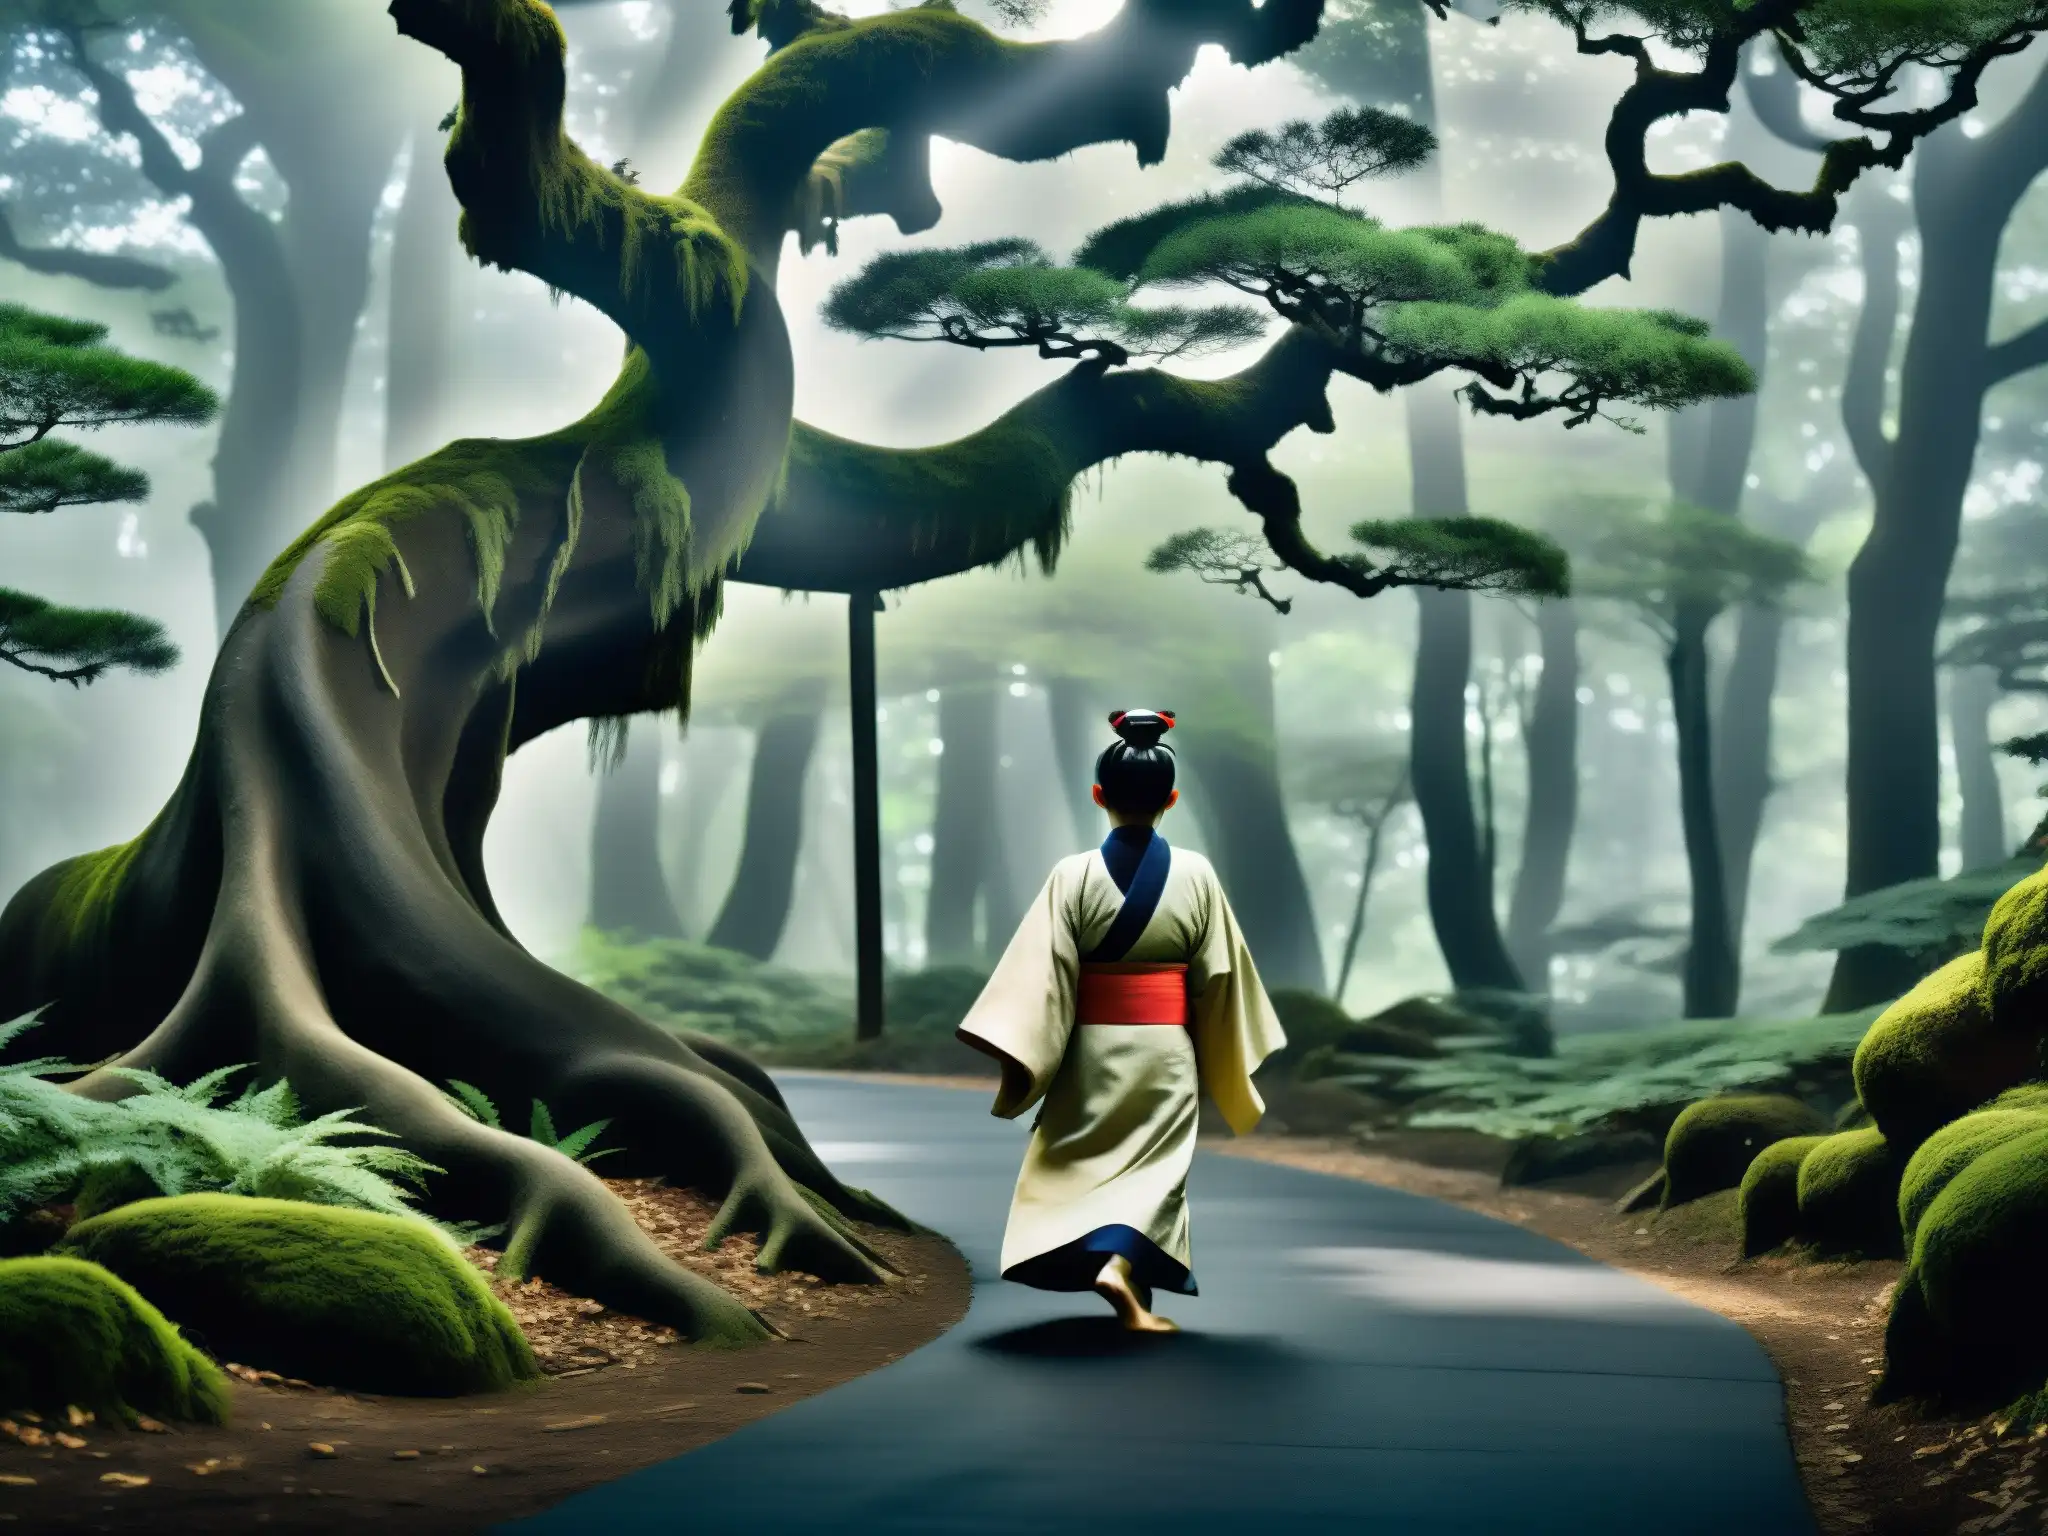 Un Rokurokubi emerge entre árboles ancestrales al anochecer, reinventando mitos japoneses para influencers